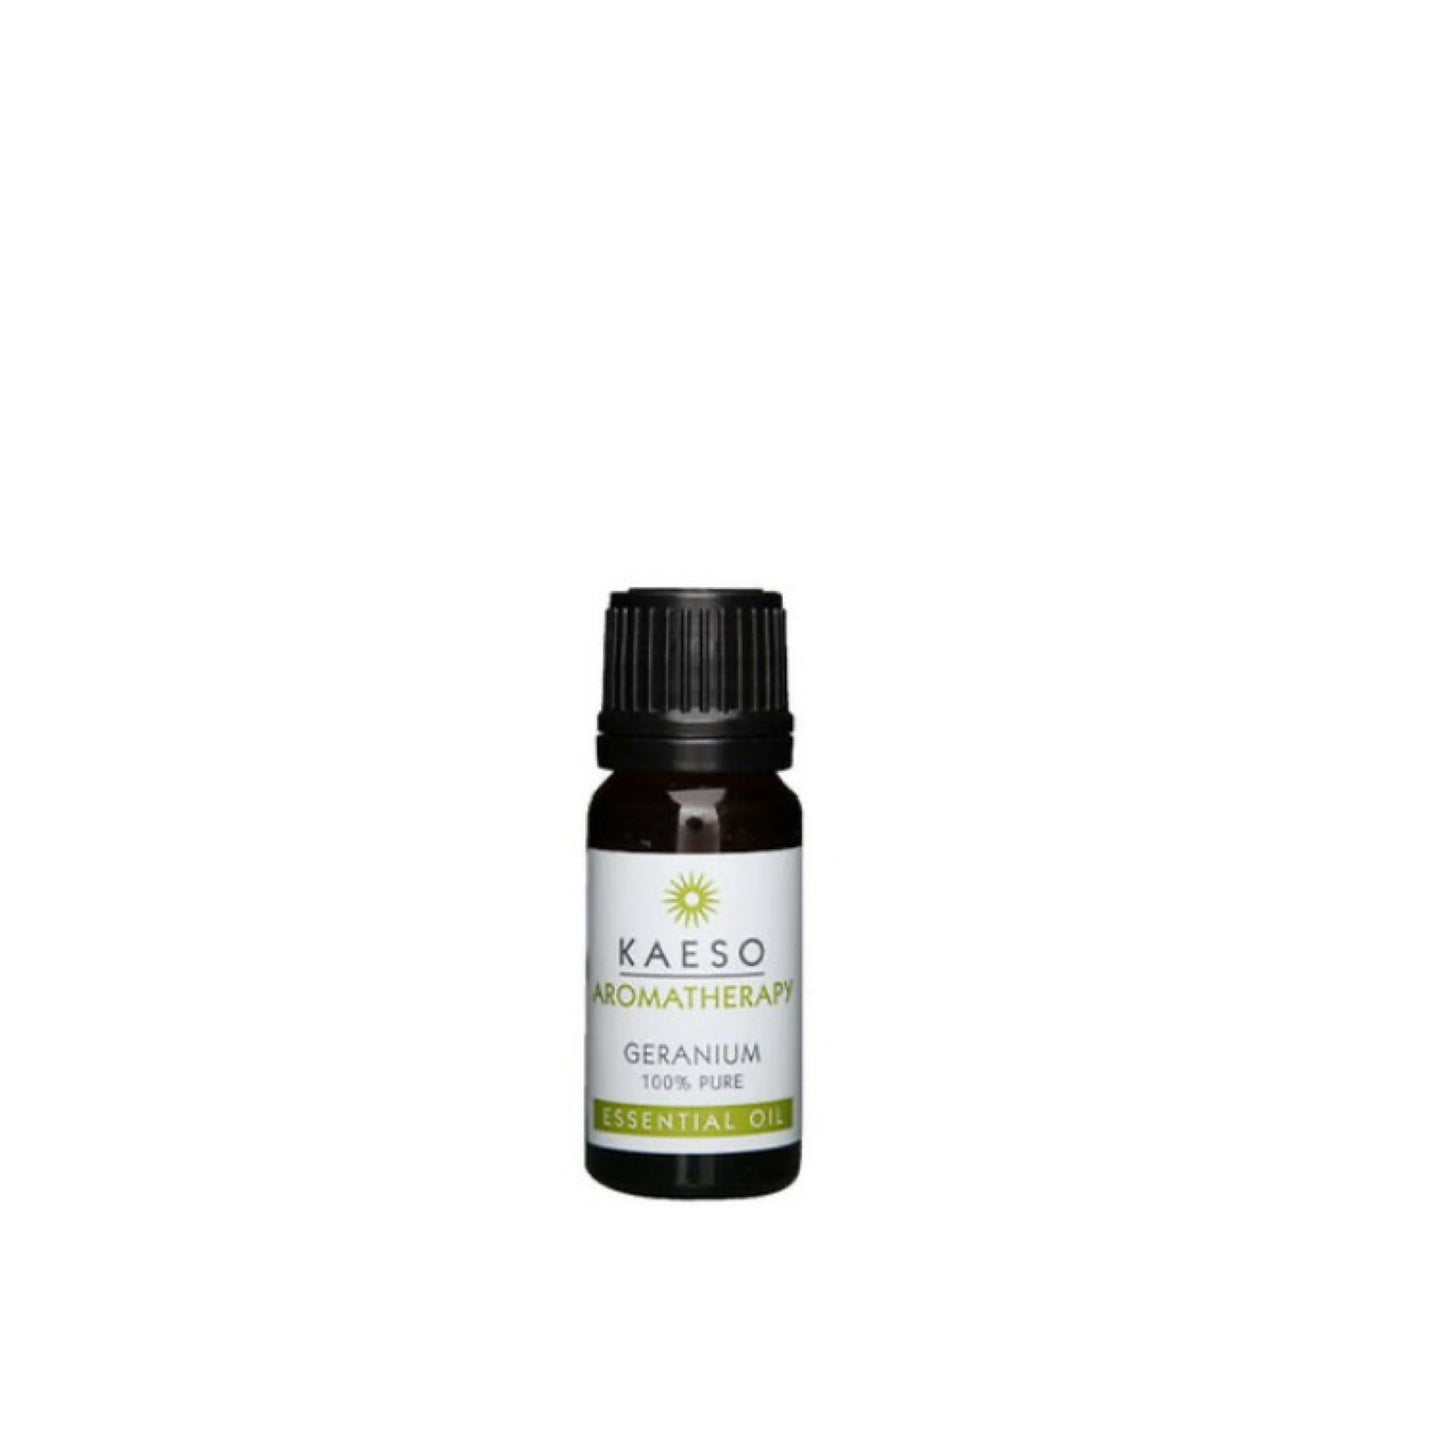 Kaeso Aromatherapy - Geranium Essential Oil (10ml)